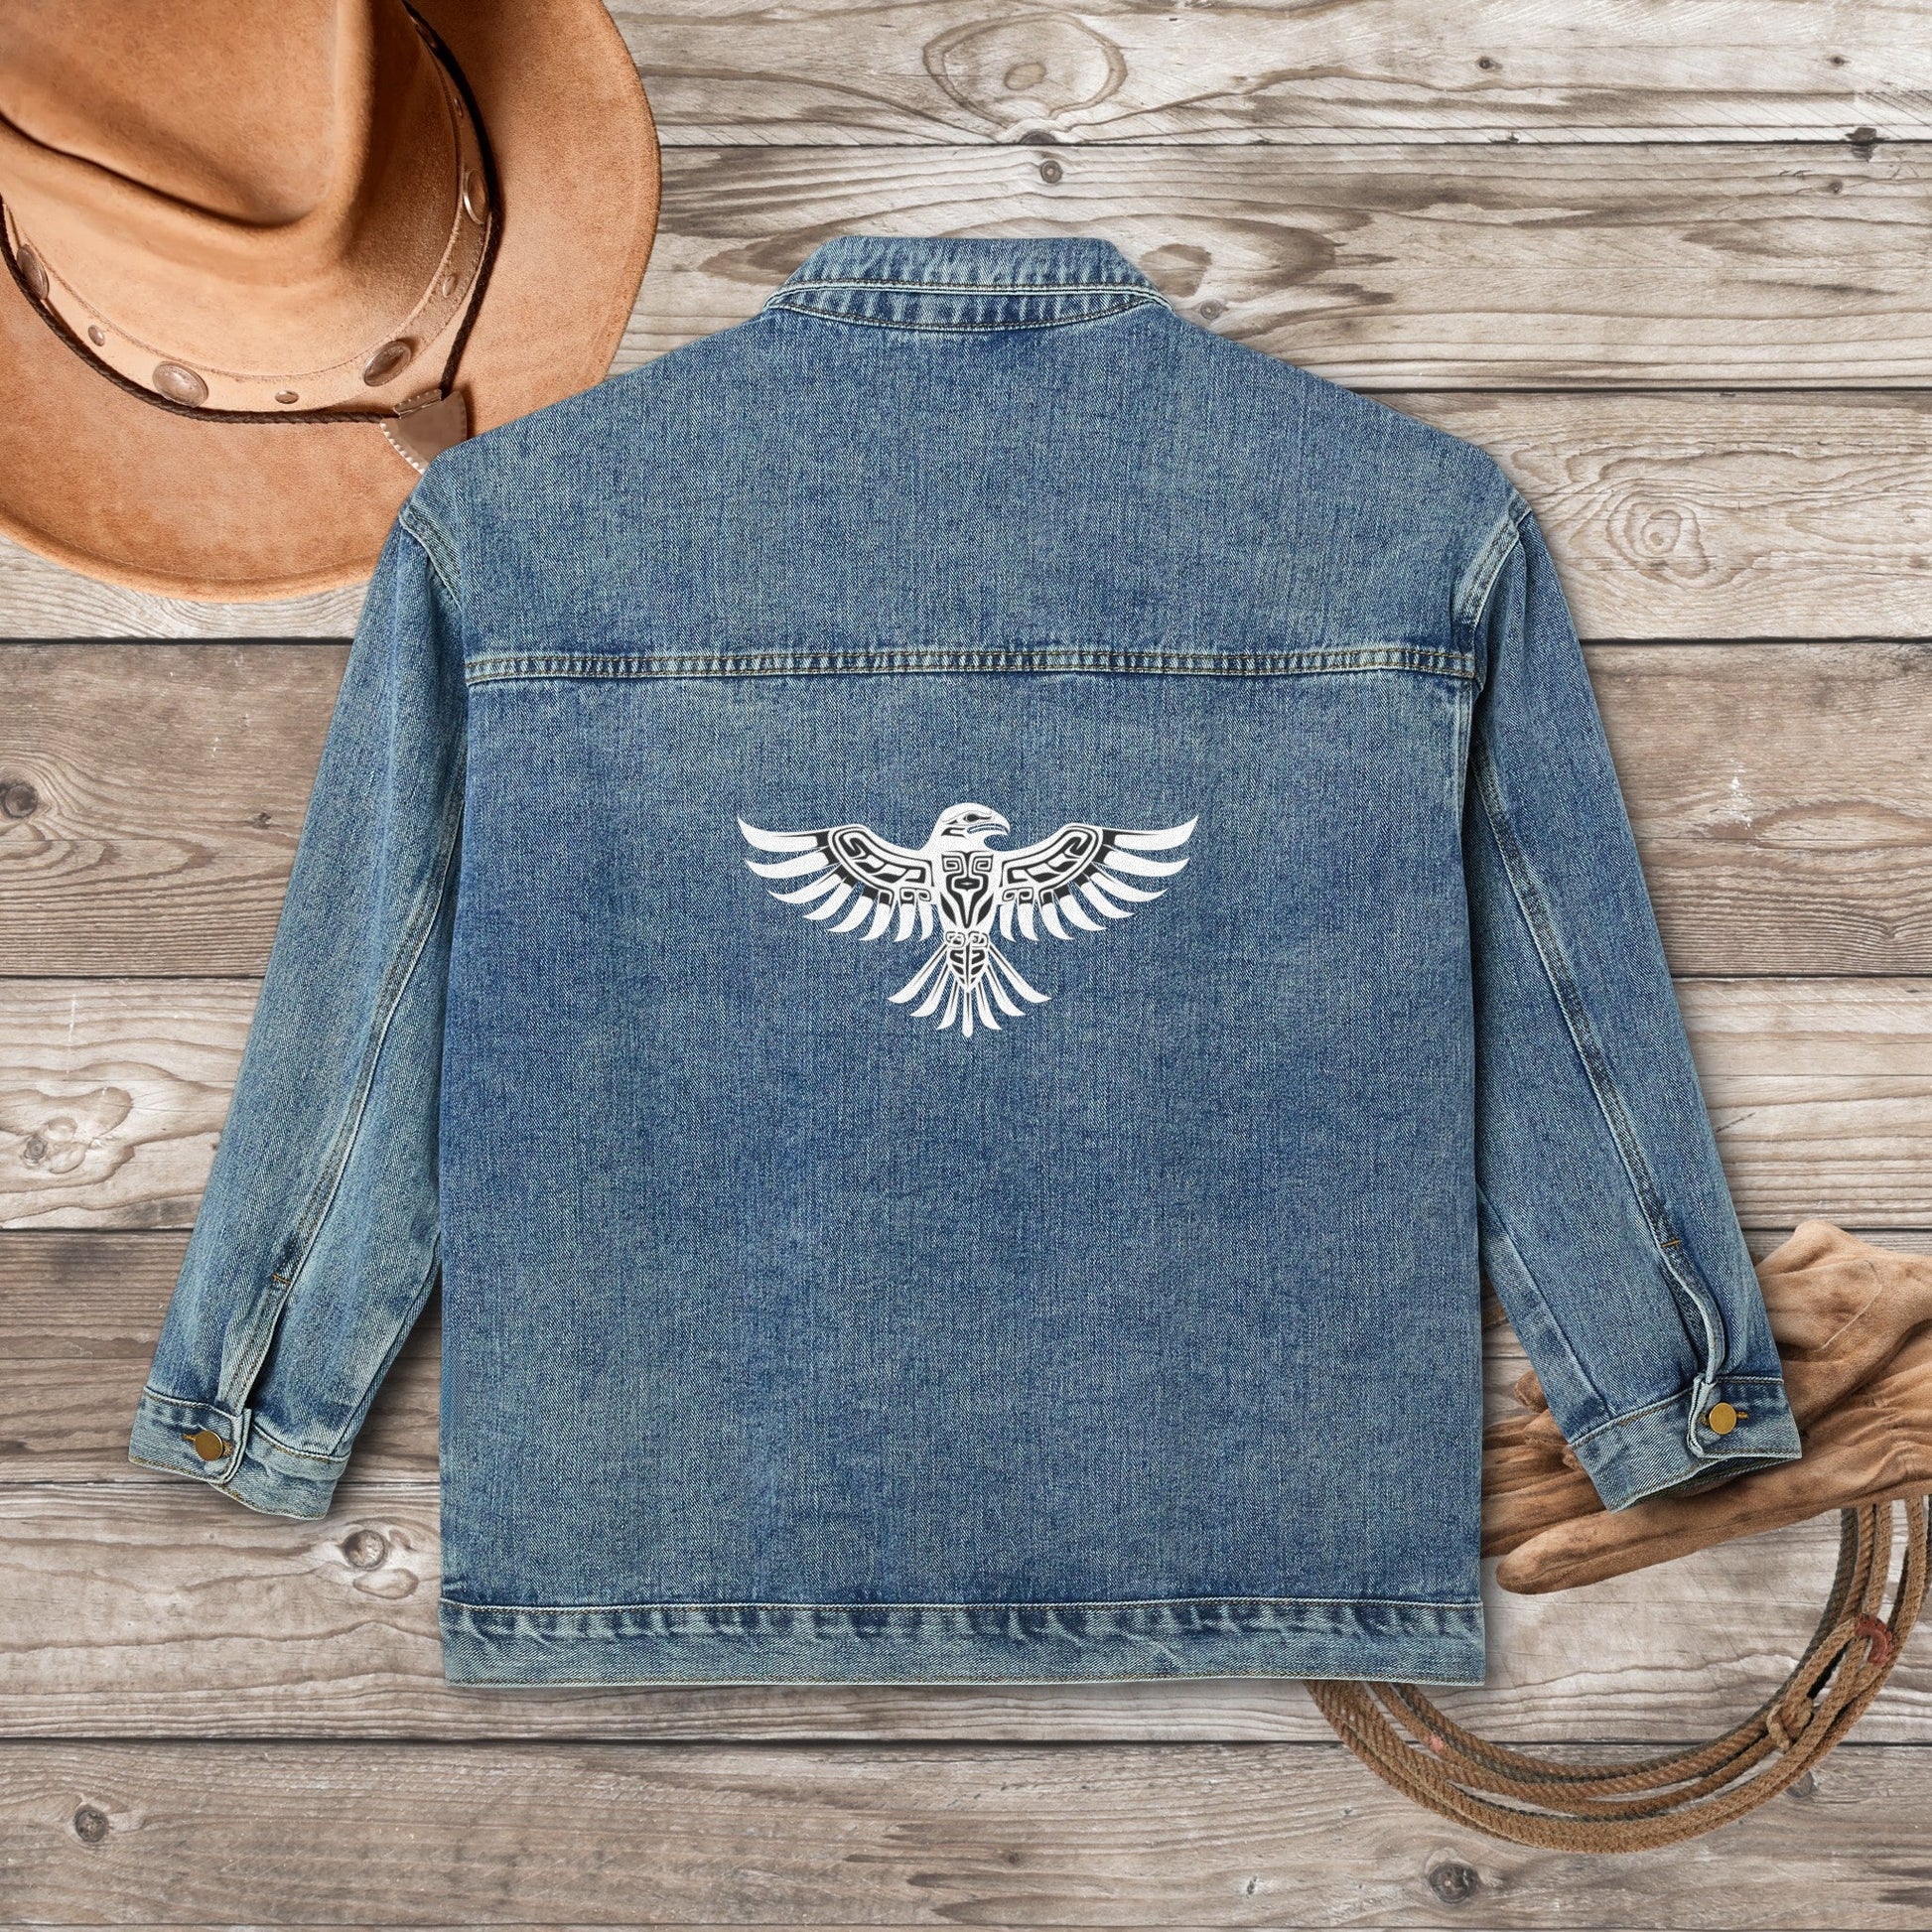 Eagle Thunderbird Jean Jacket, Cotton Denim Native American Style Spirit Animal - FlooredByArt